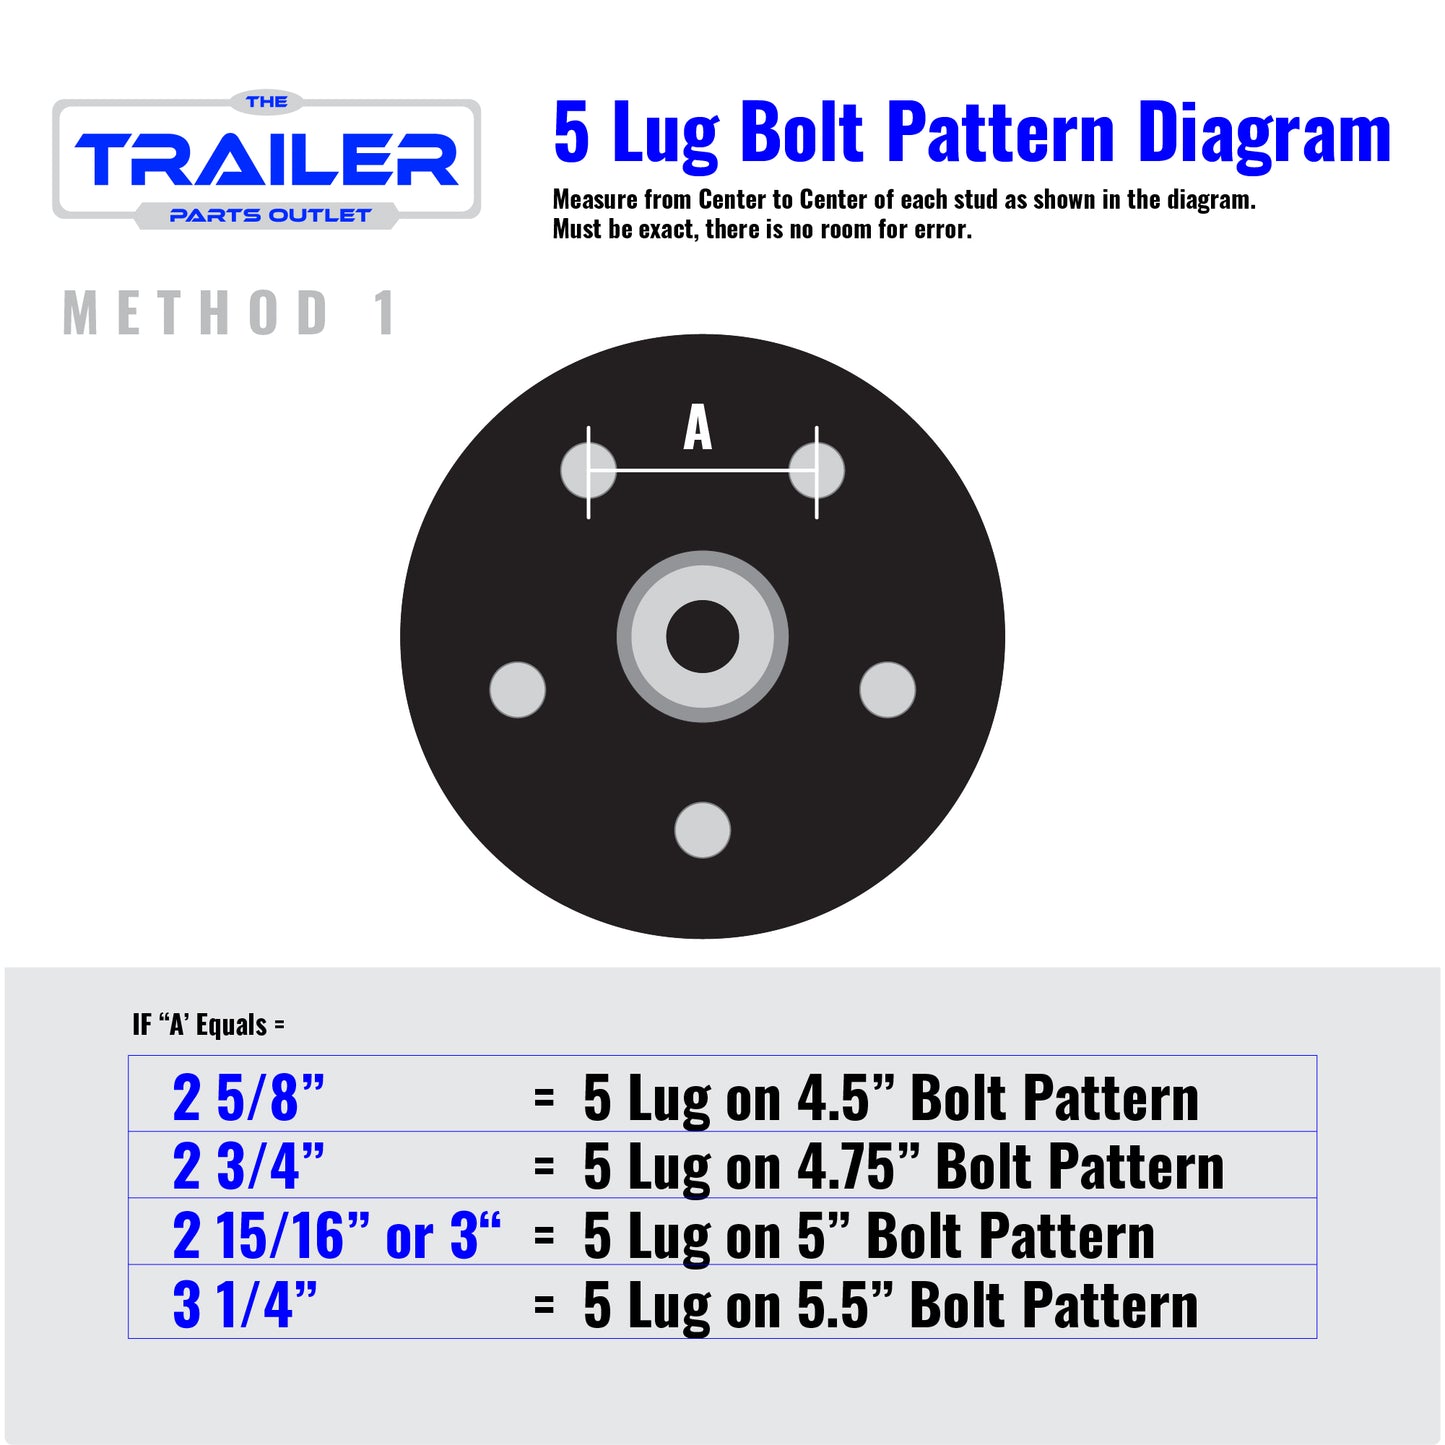 5 Lug Bolt Pattern Diagram Method 1